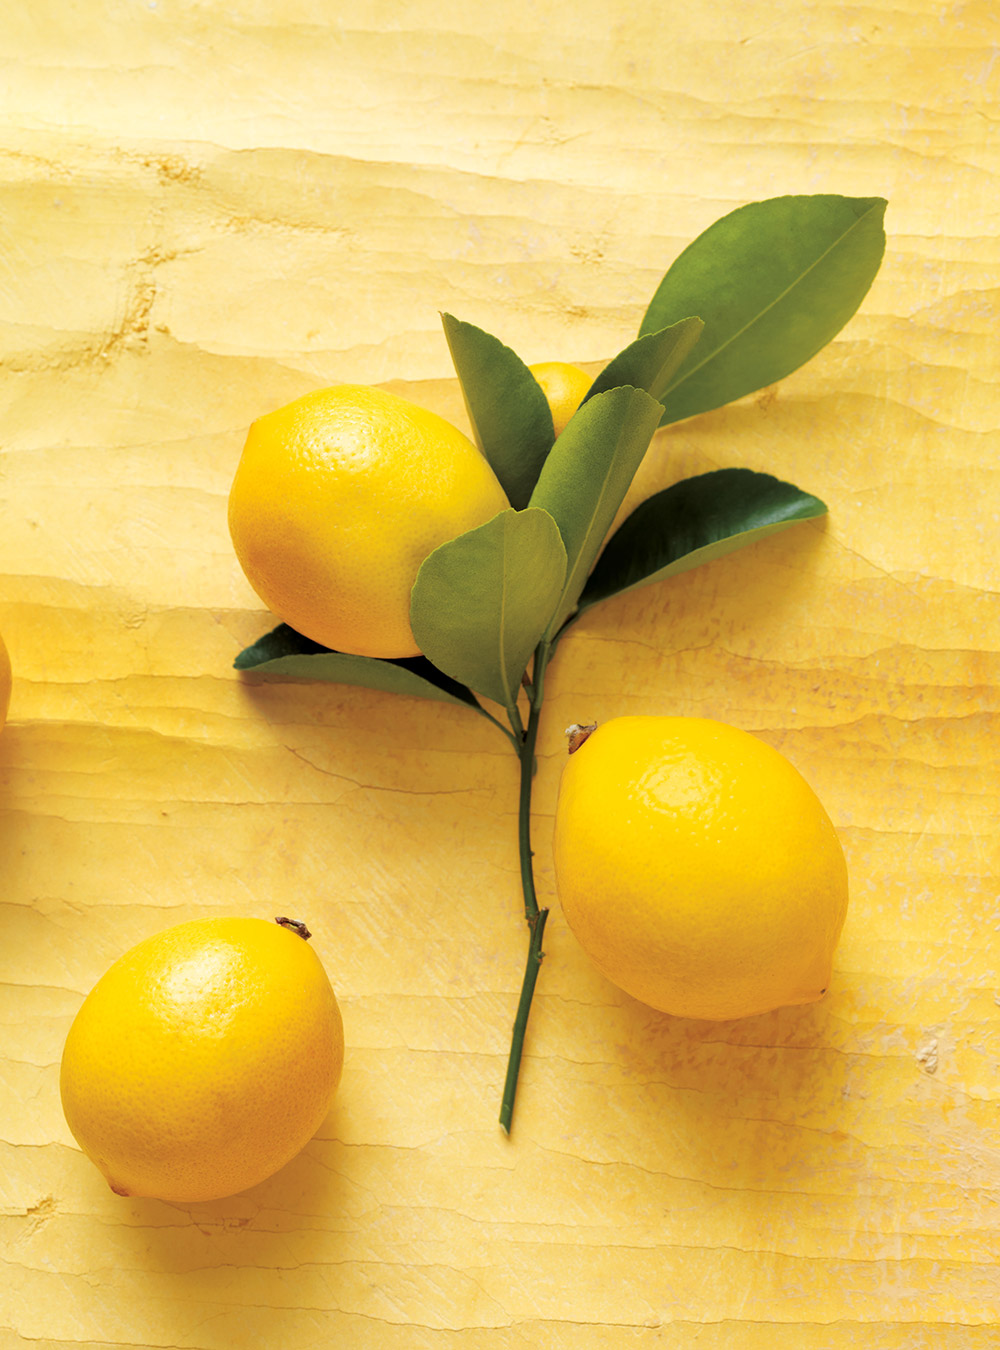 Tarte au citron meringuée classique